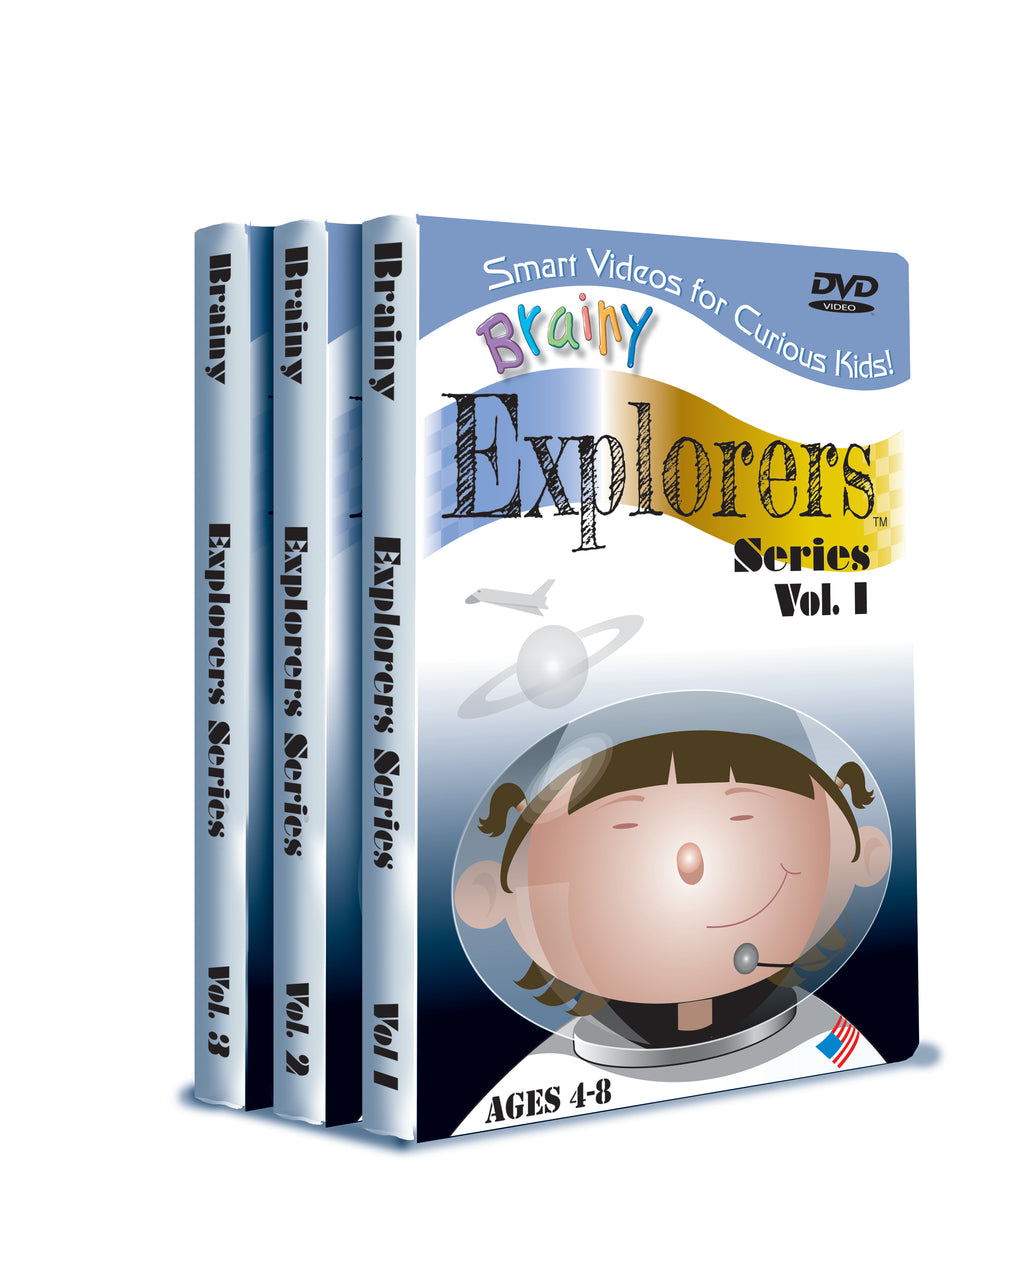 Brainy Explorers Book and DVD Series